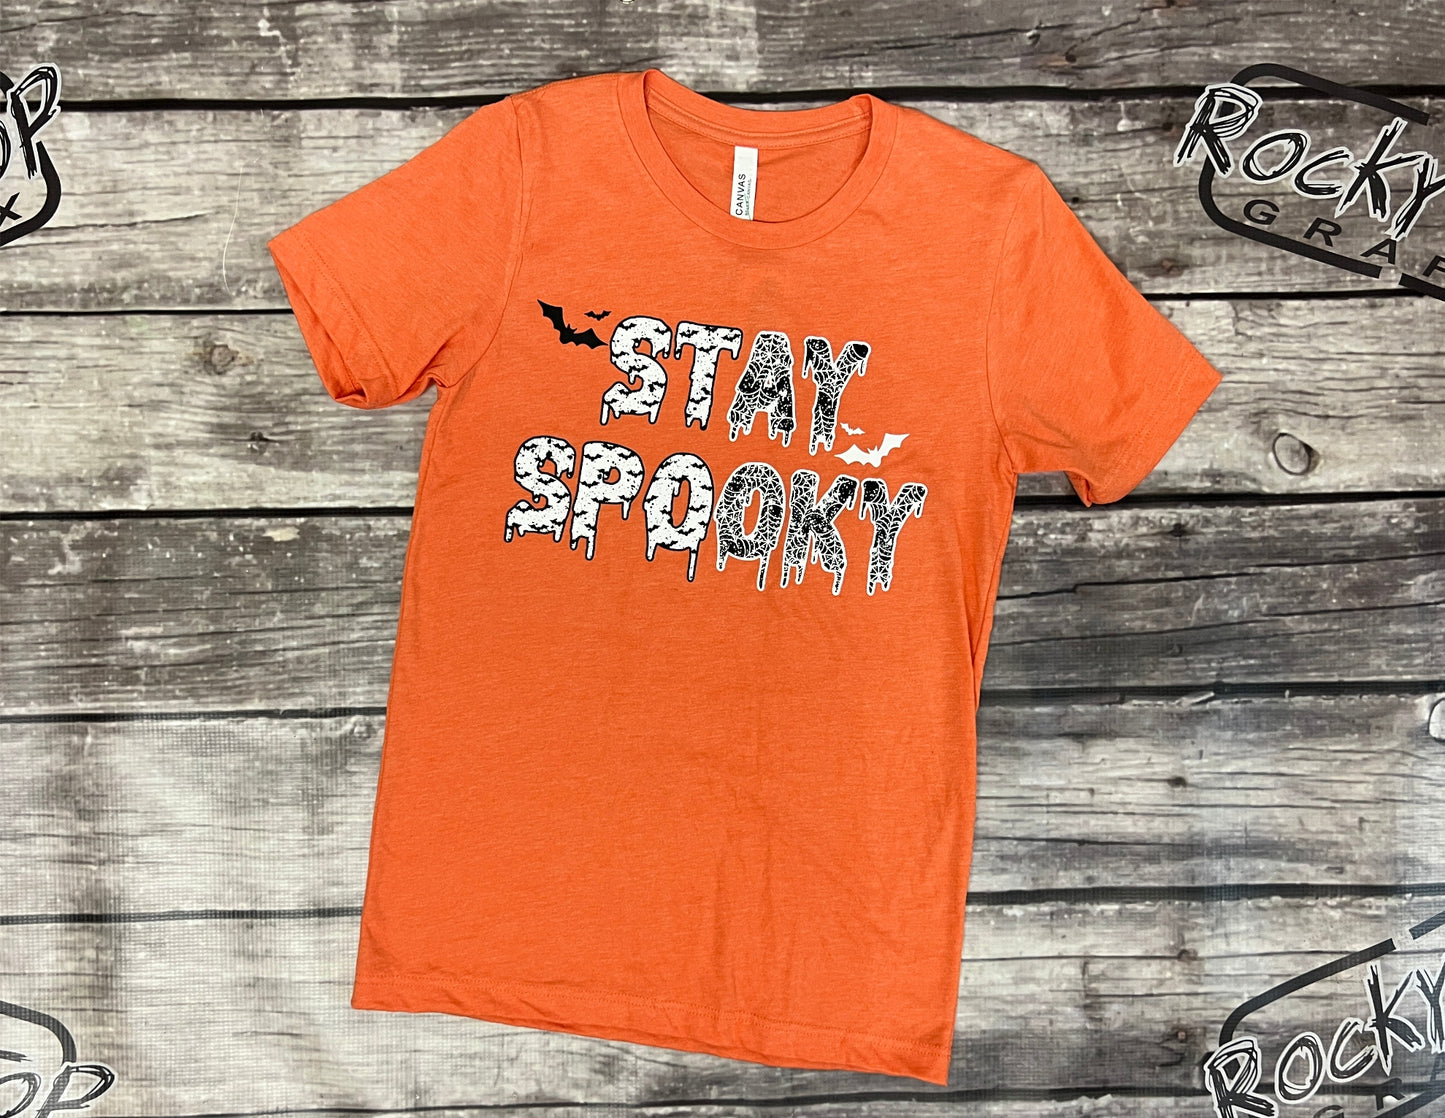 Stay Spooky Shirt